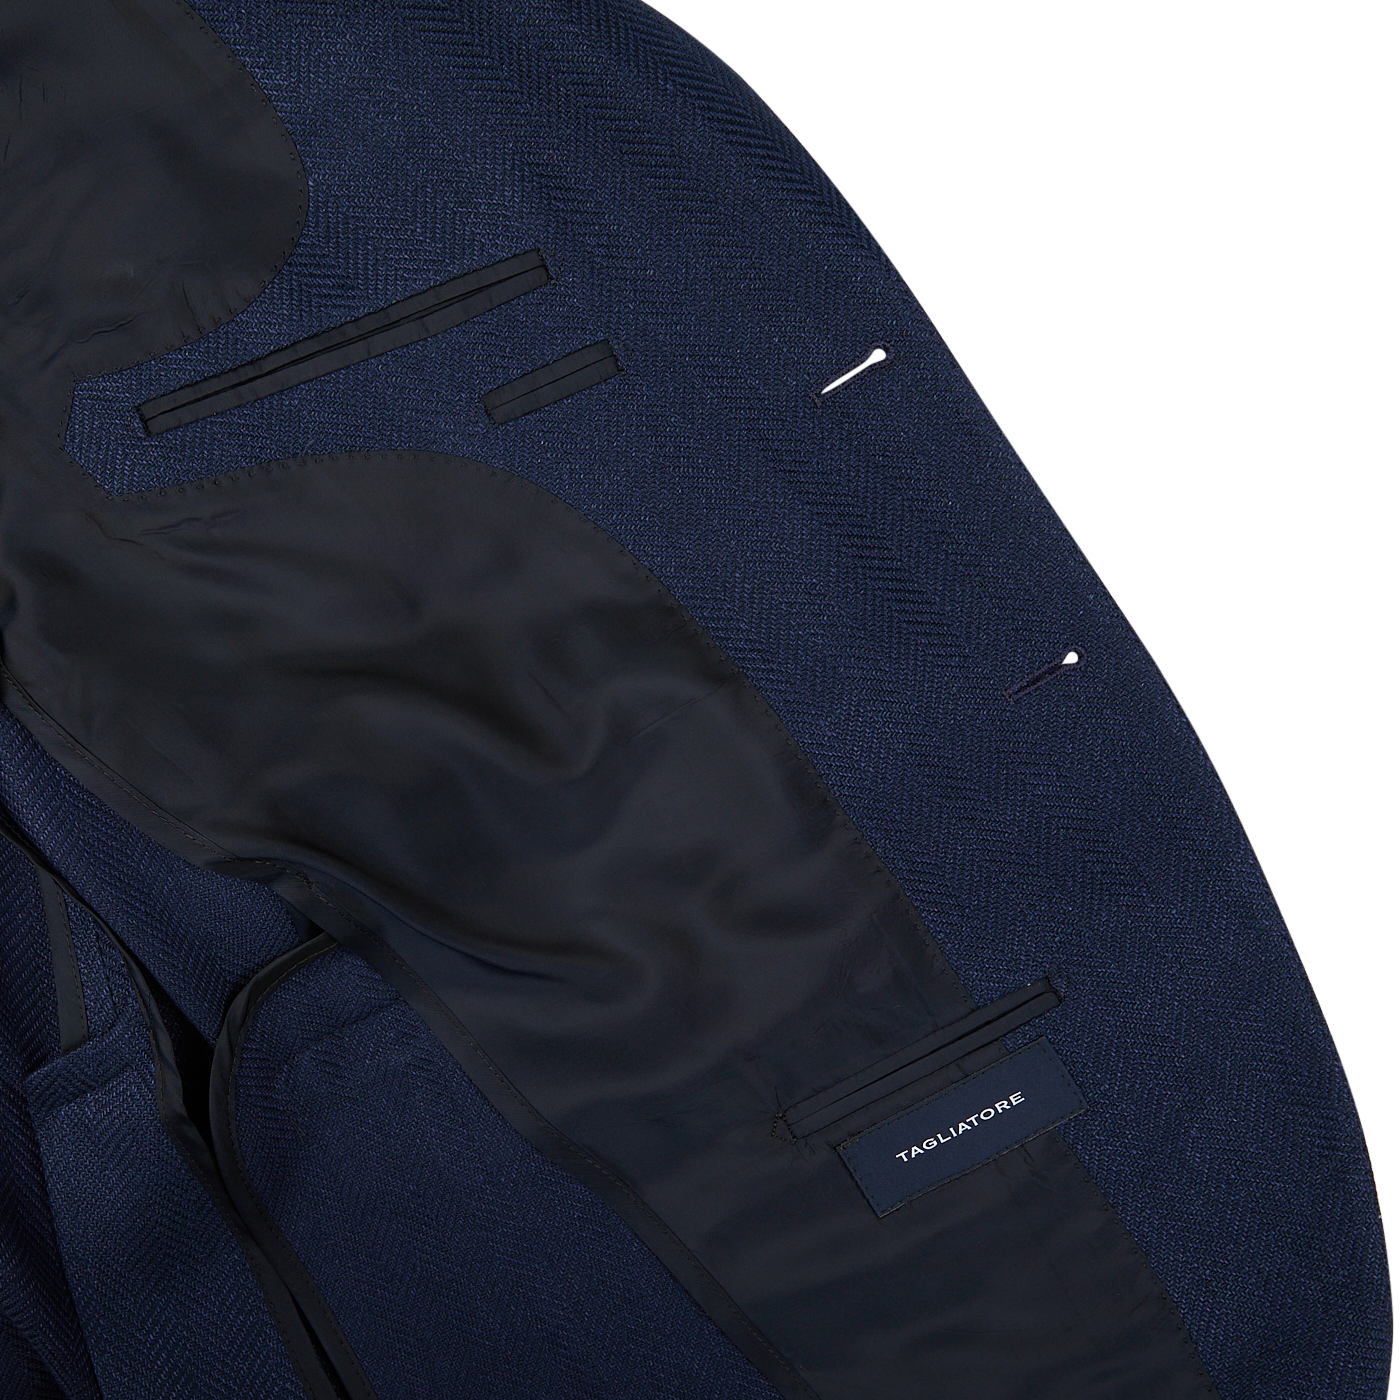 Close-up of a navy blue herringbone cotton linen Vesuvio blazer with black detailing, peak lapel, and a "Tagliatore" brand label.